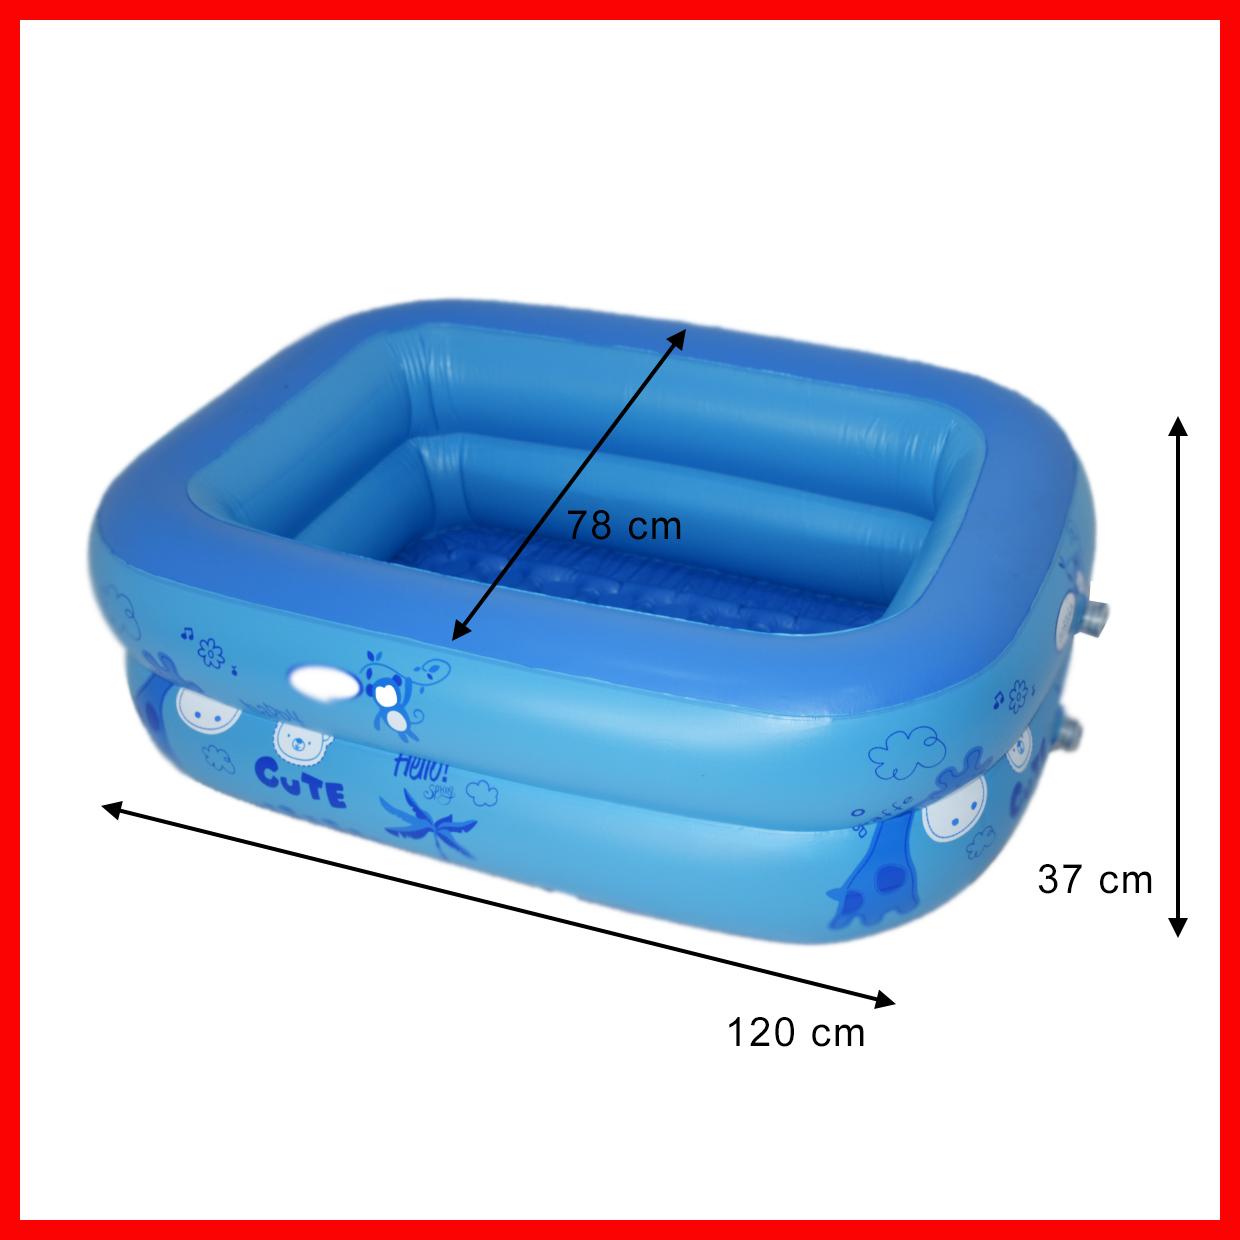 BabySPA Home Spa 2 Layer Pool (120 x 78 x 37cm) 